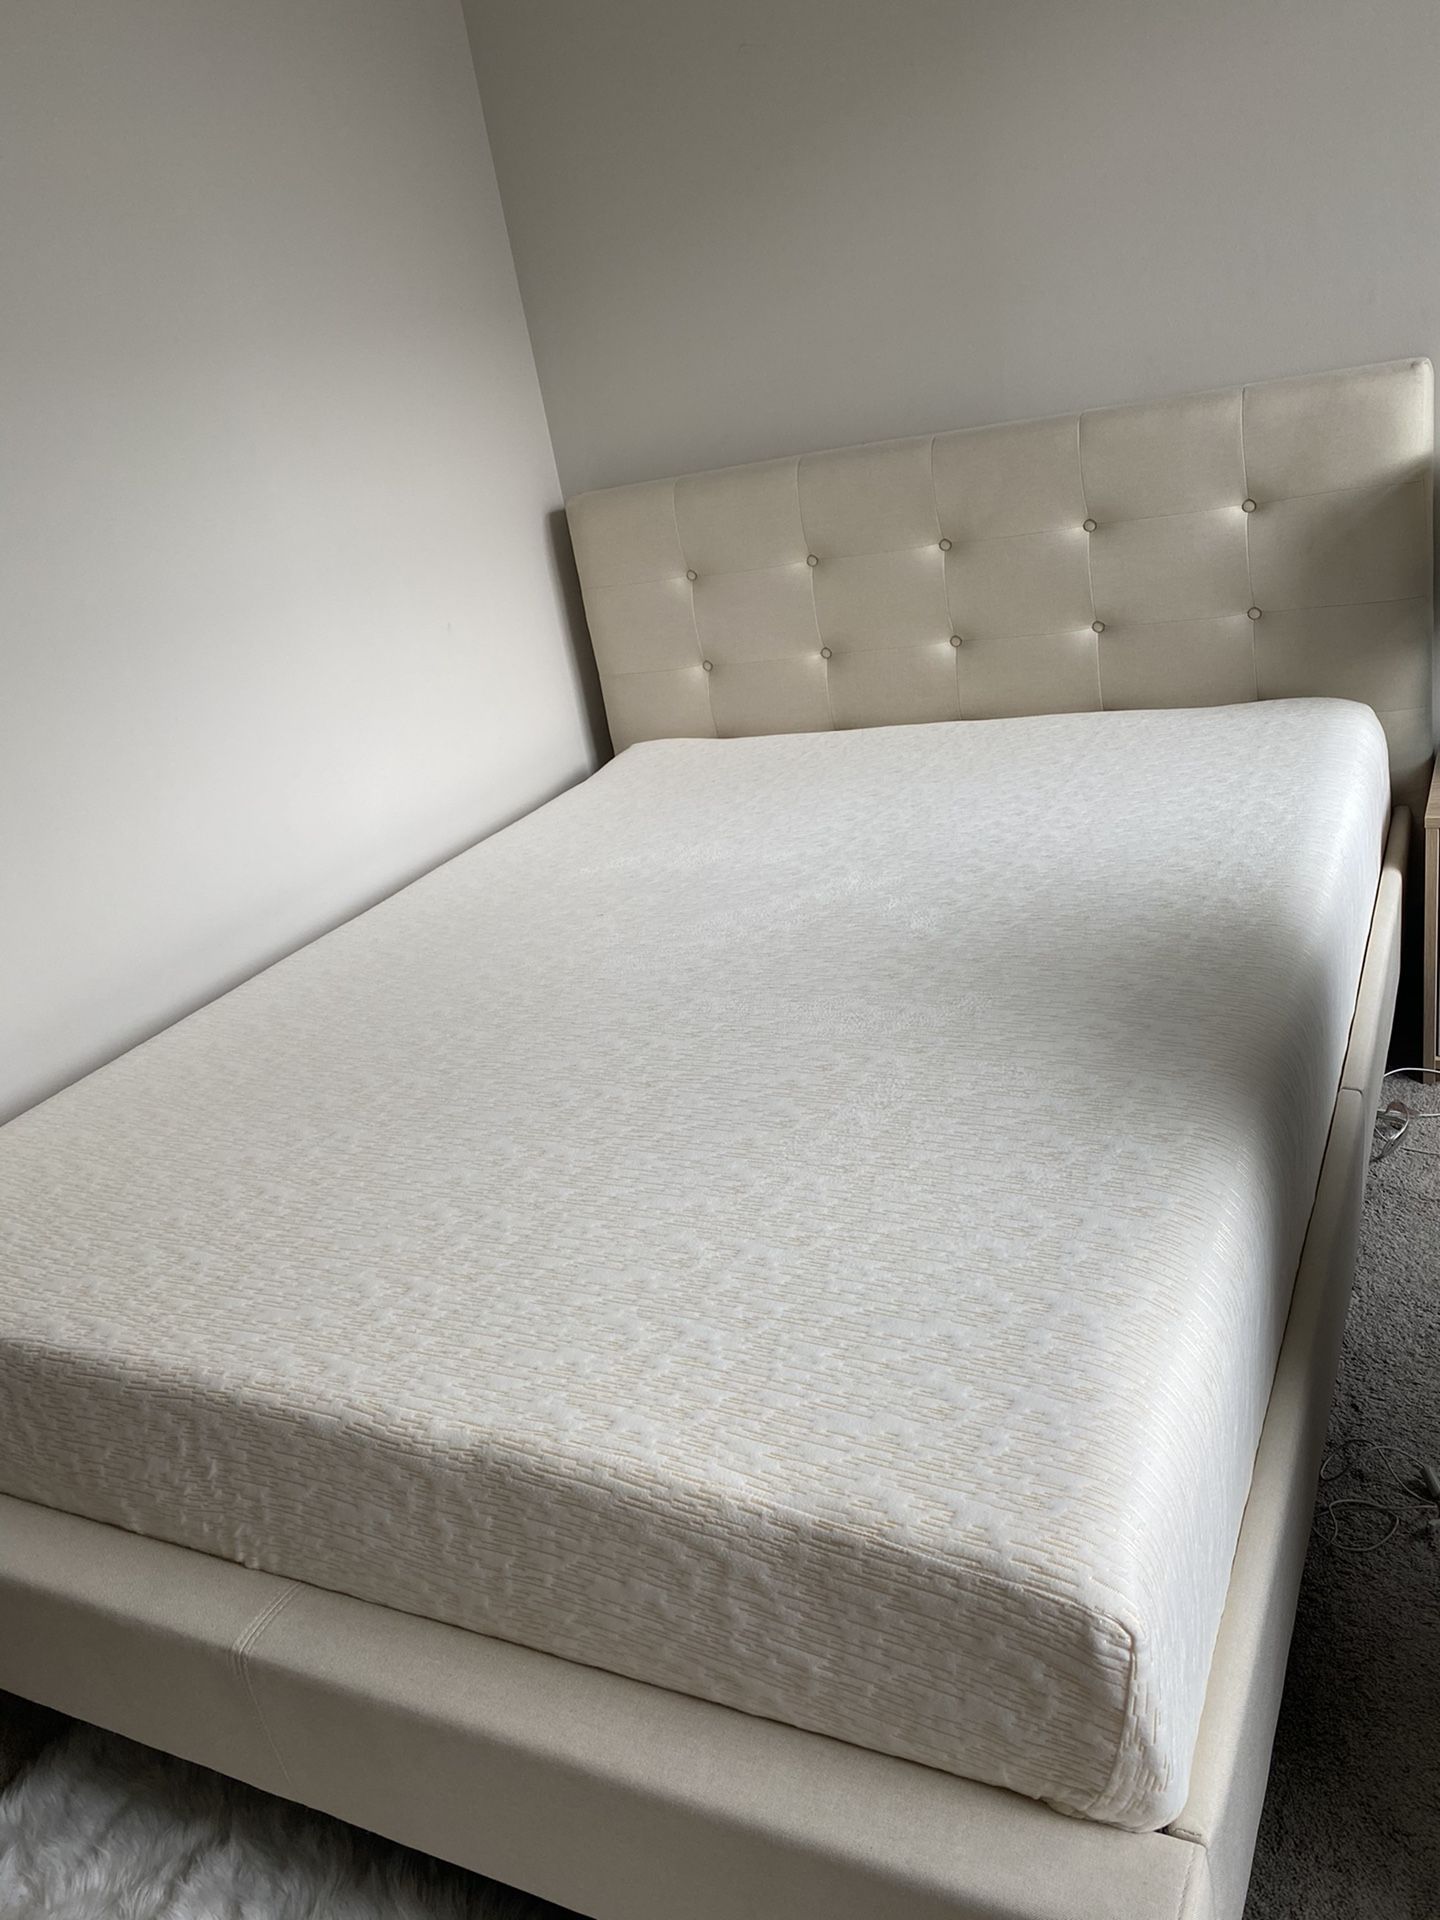 Queen size bed frame headboard and mattress